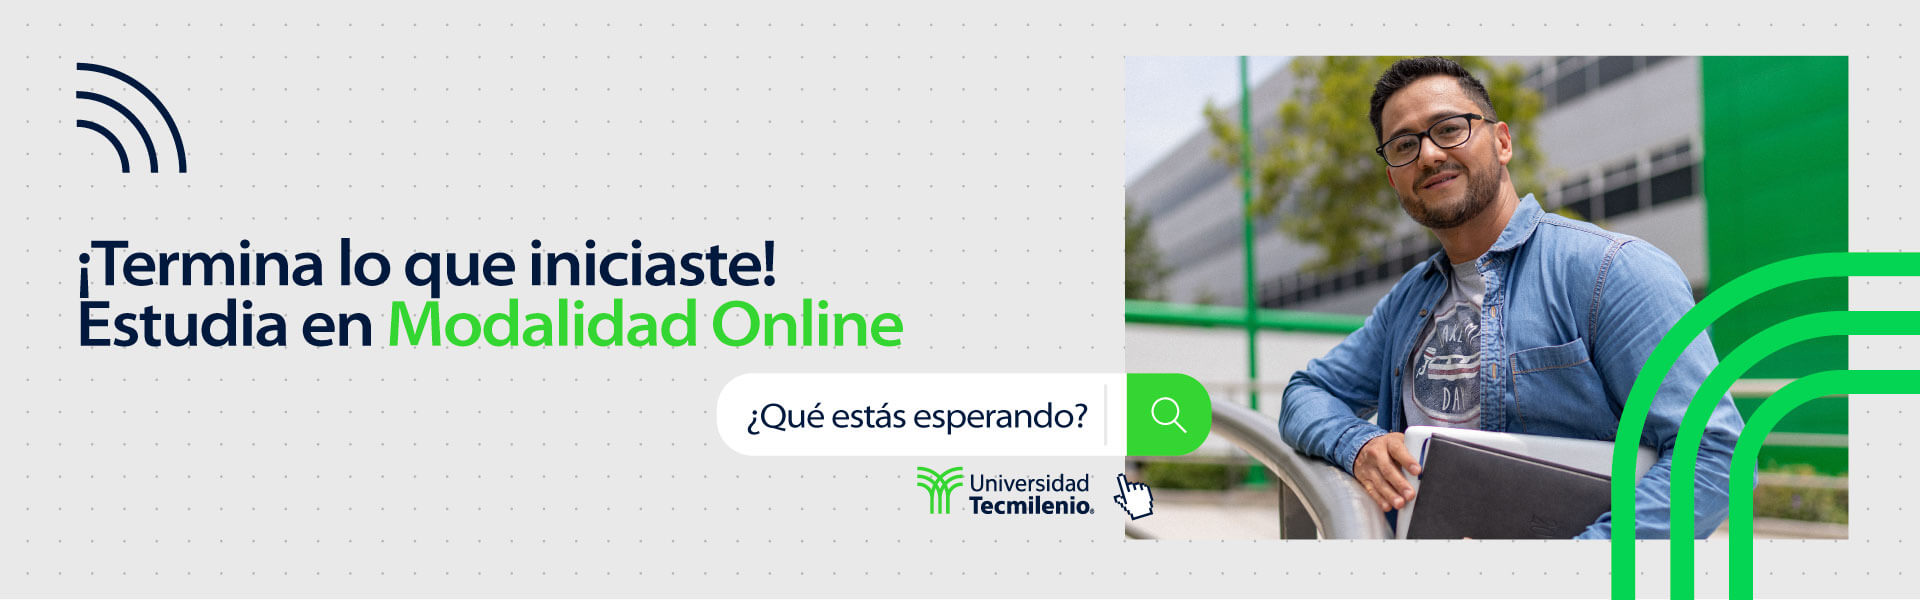 tecmilenio-online